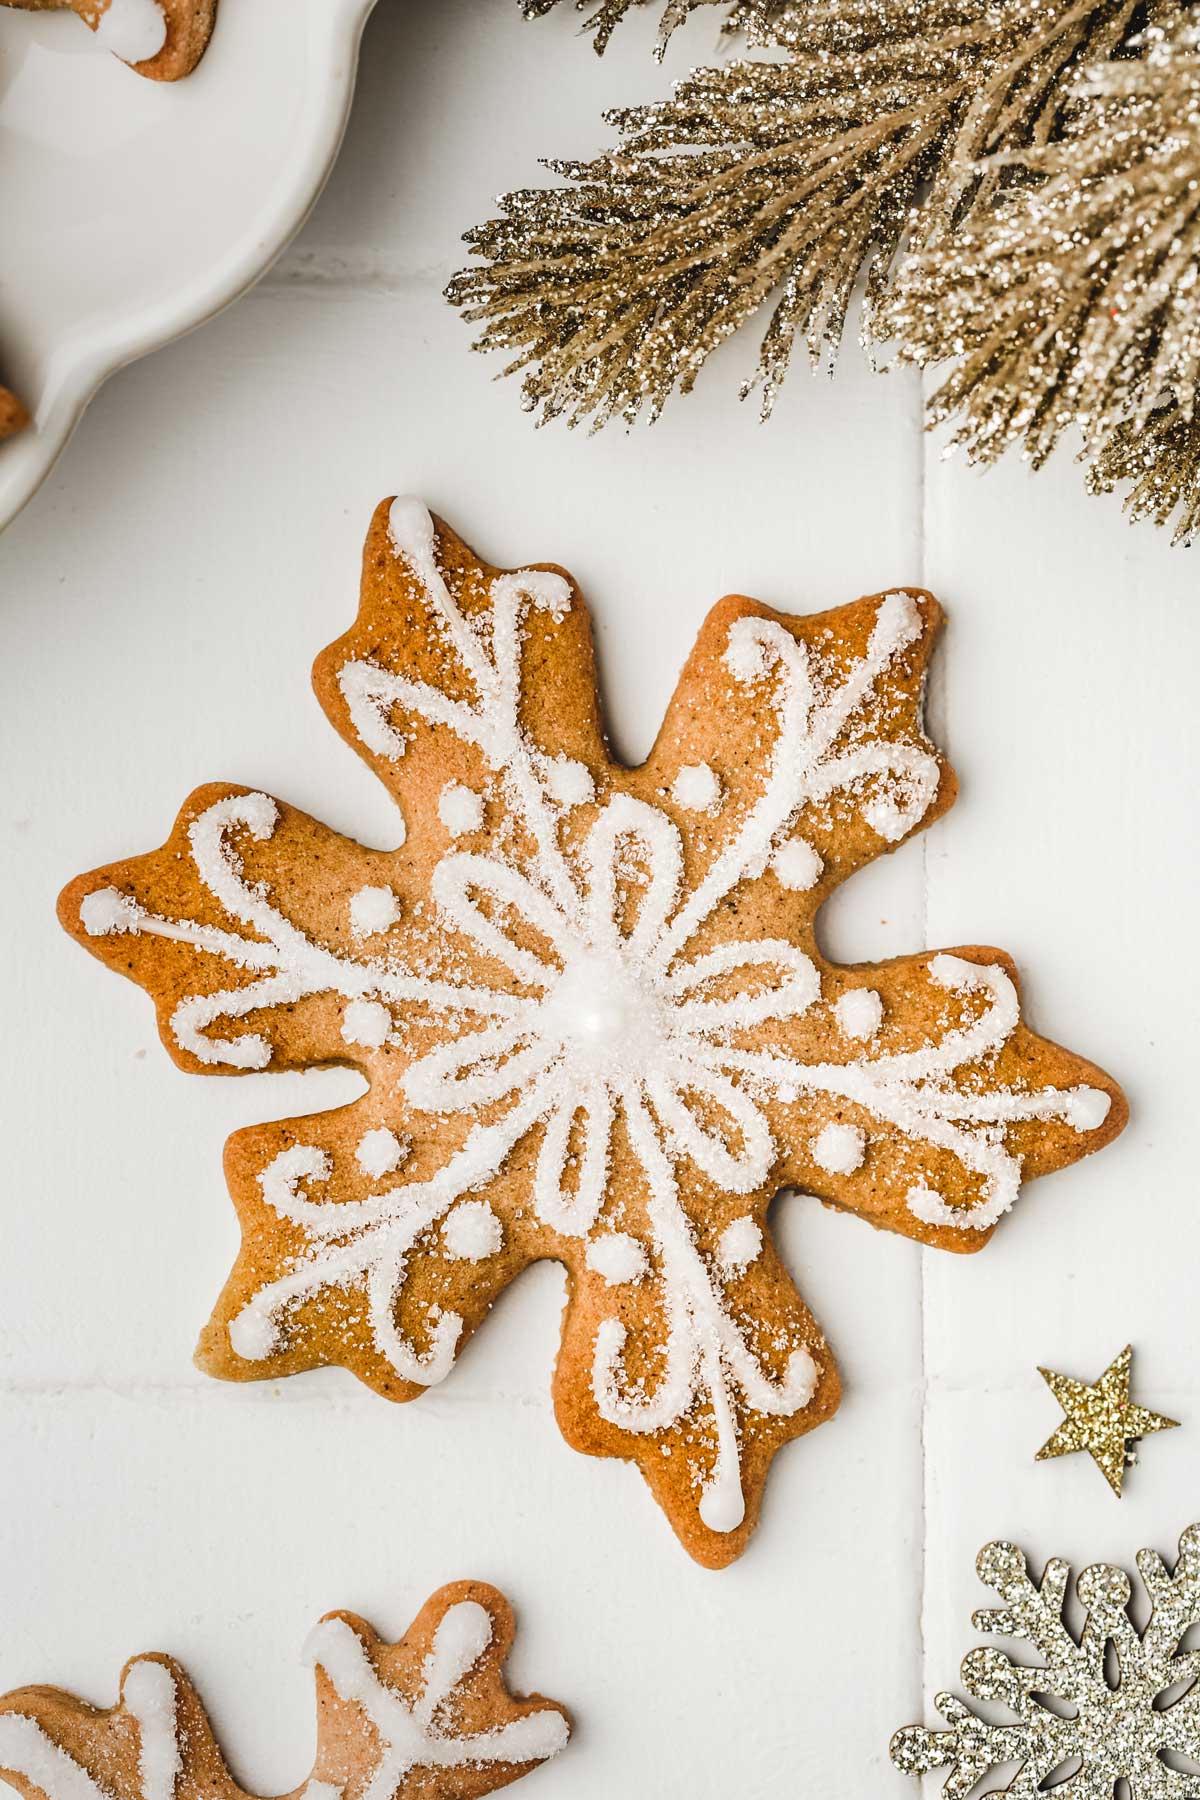 https://sweetlycakes.com/wp-content/uploads/2016/11/snowflakegingerbreadcookies-12.jpg